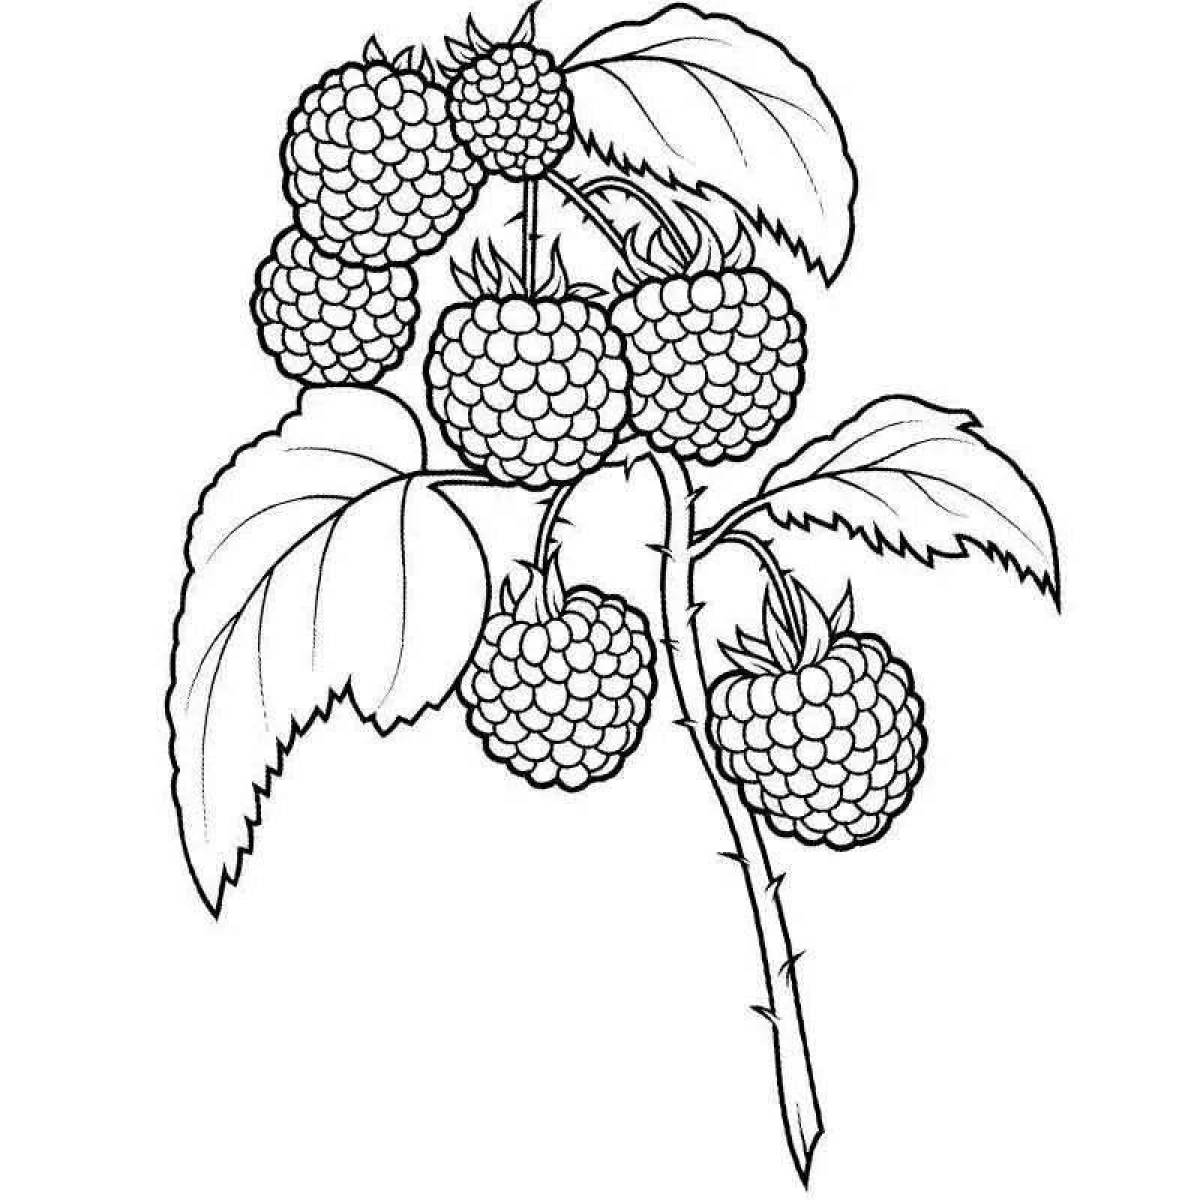 Berries #1